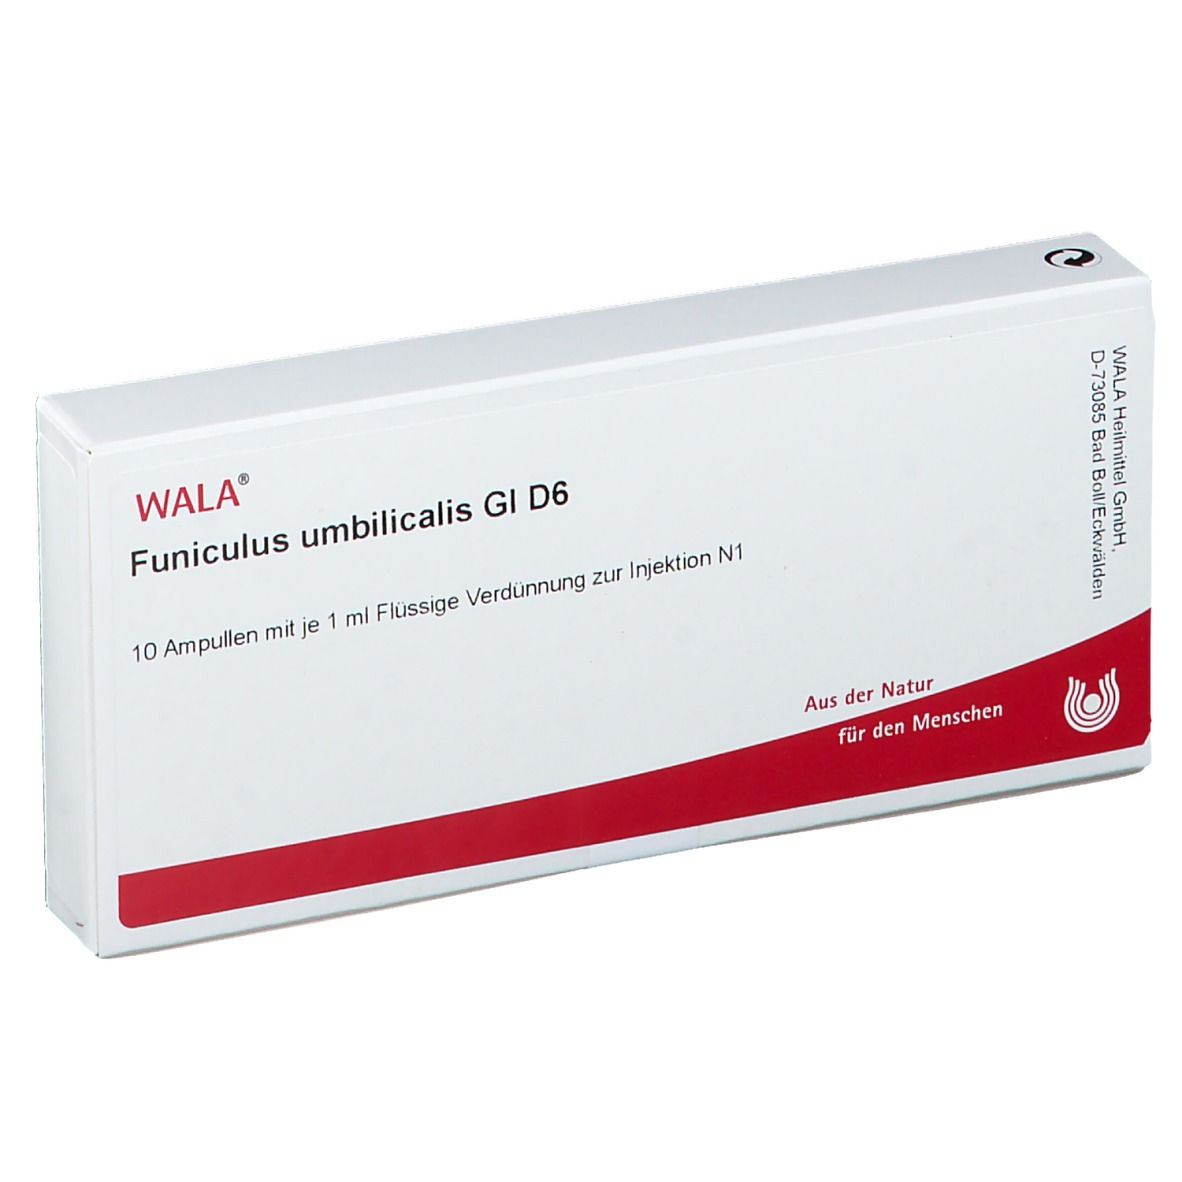 Wala® Funiculus umbilicalis Gl D 6